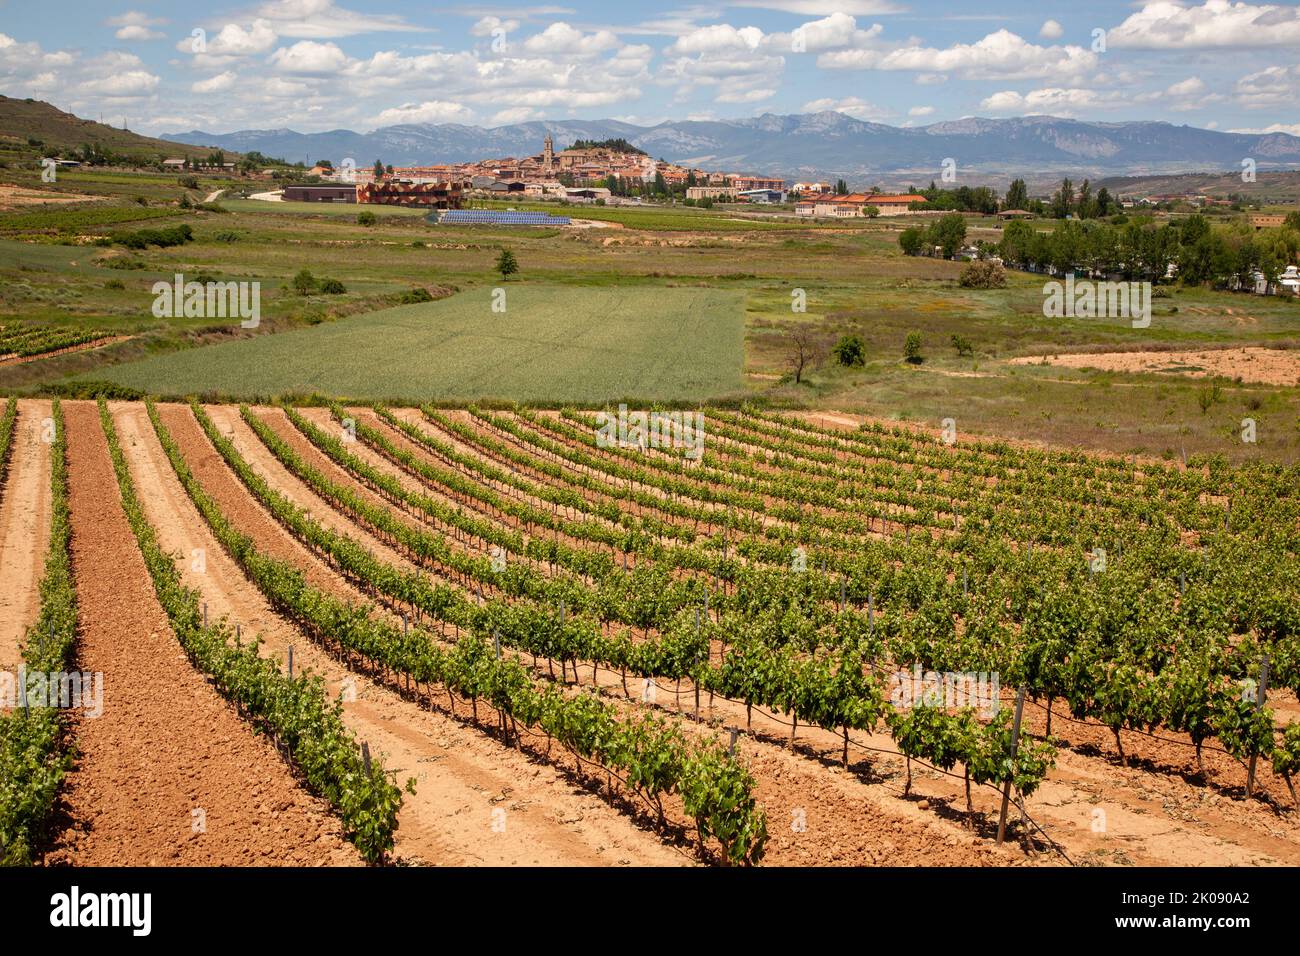 Spanish vineyards in the Rioja region of Spain near Navarrete Stock Photo